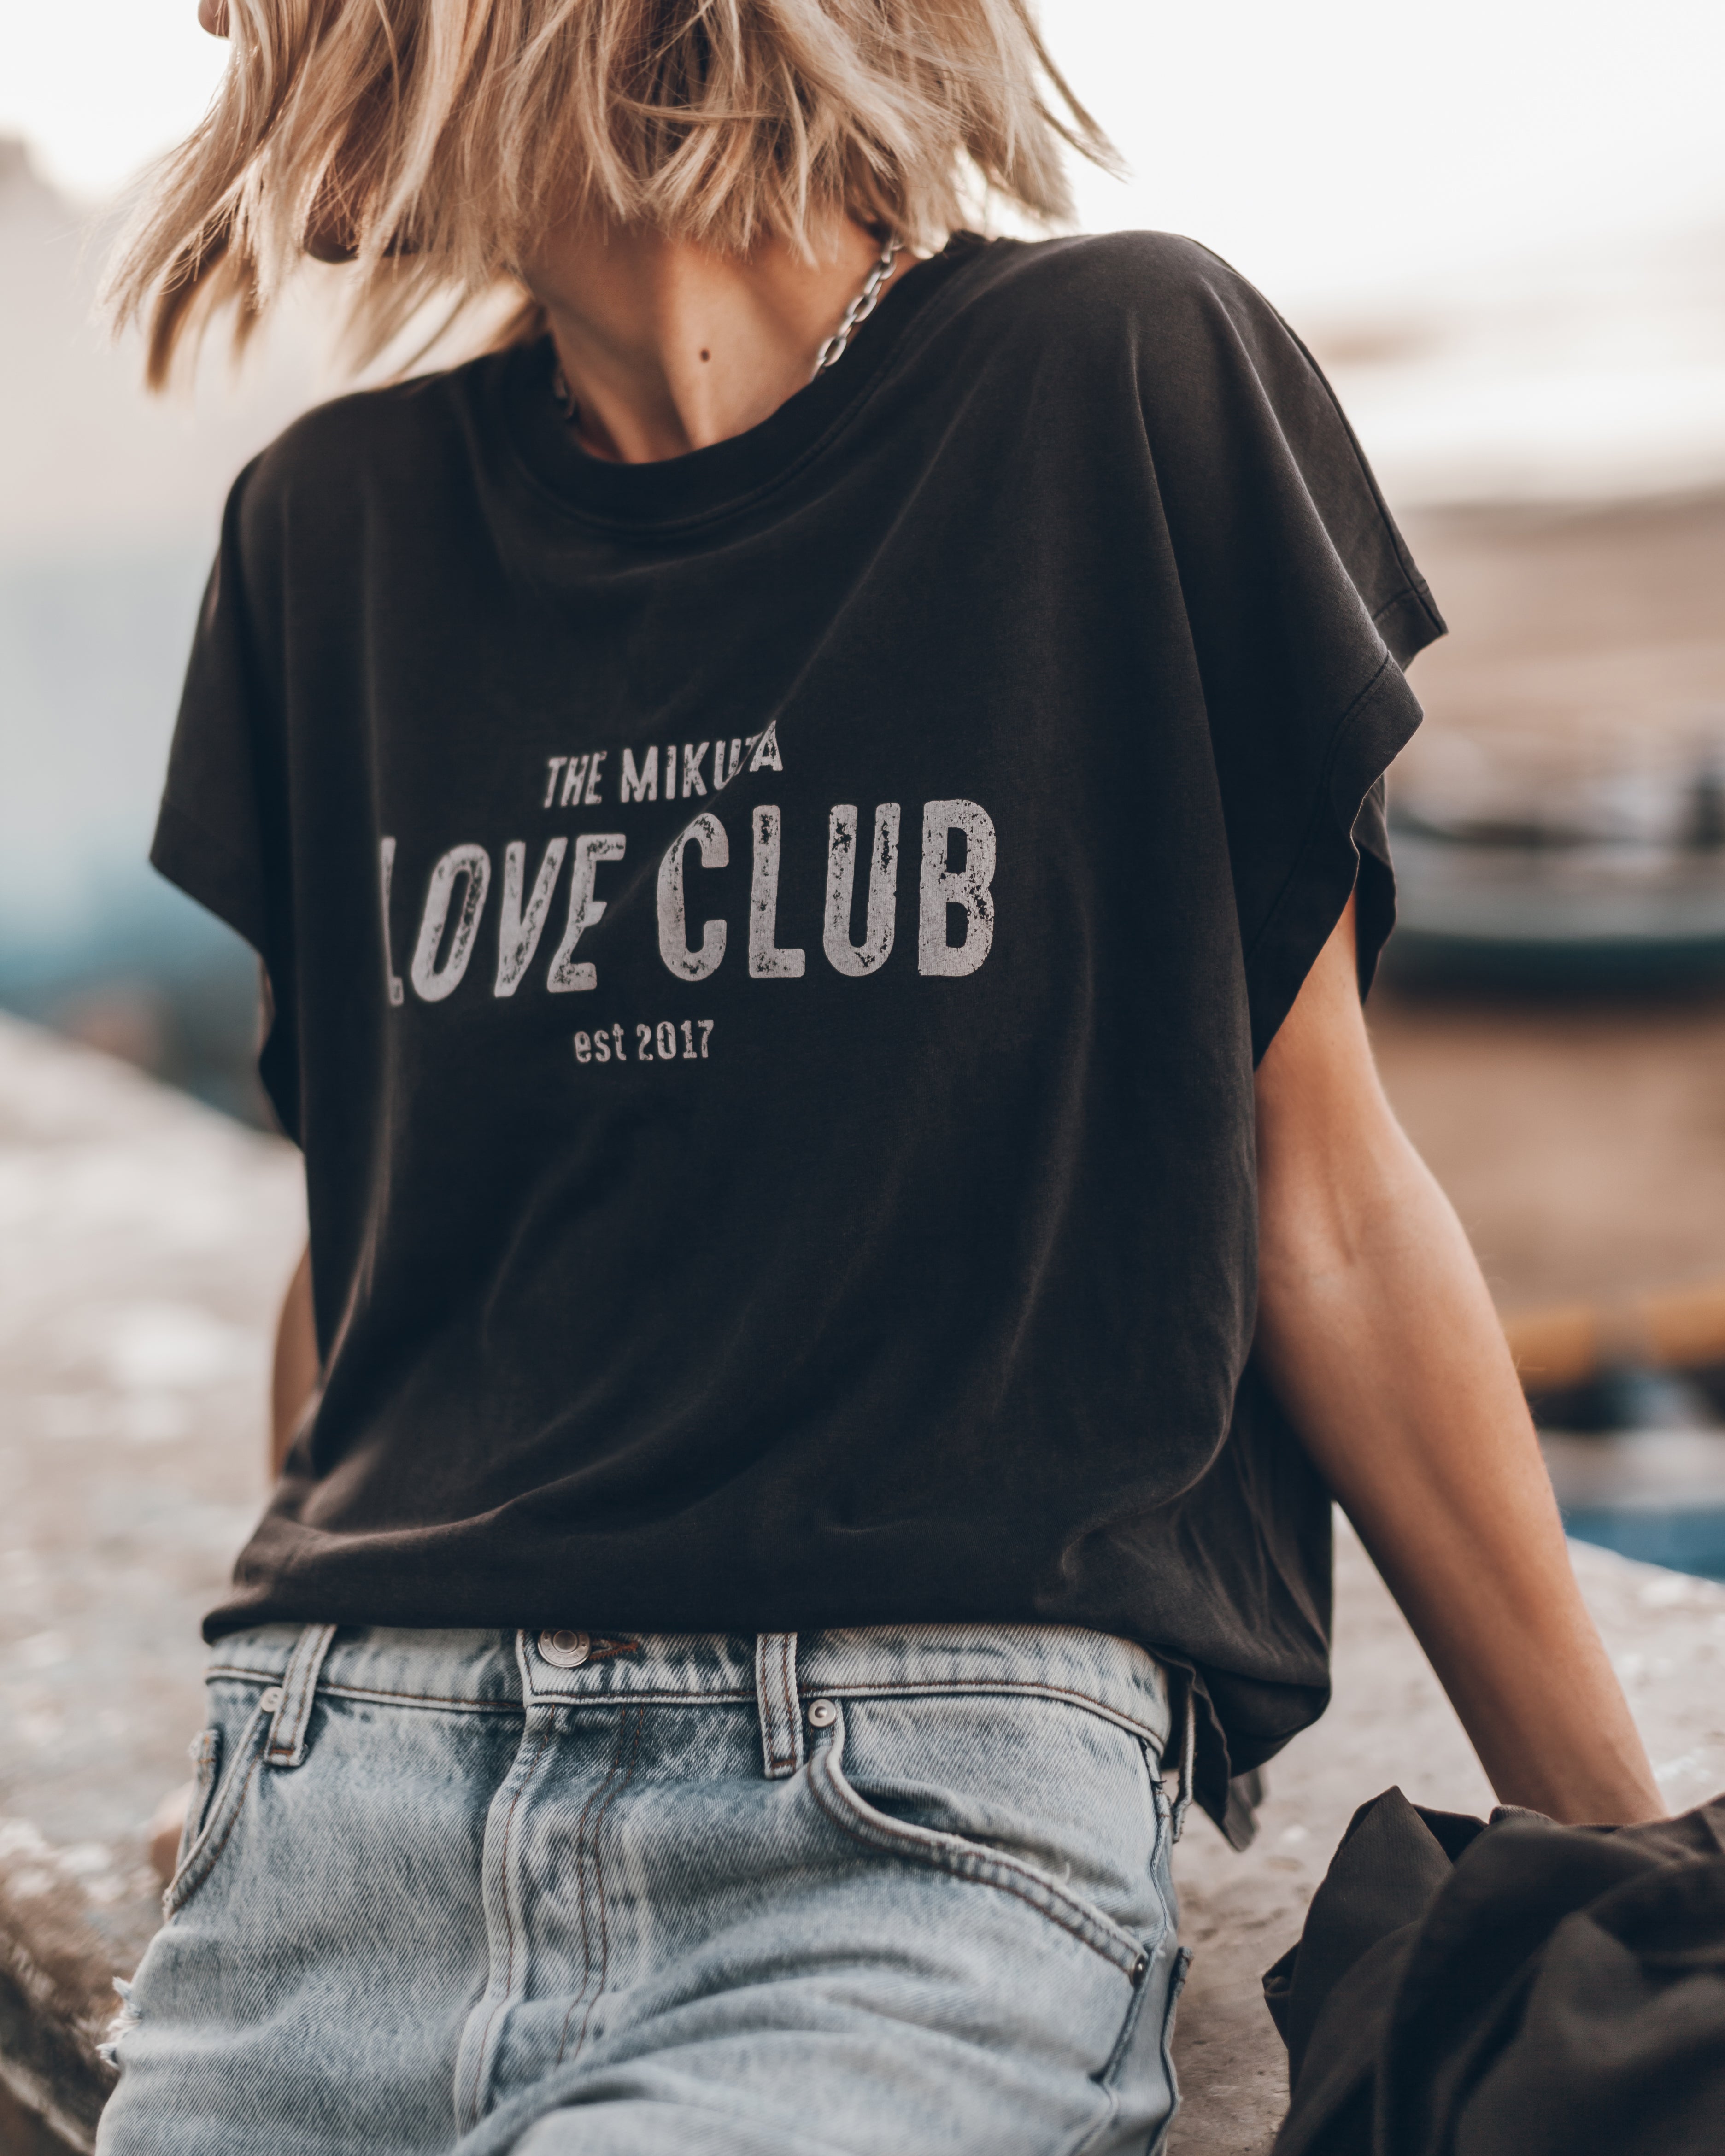 The Dark Batwing Love Club T-Shirt